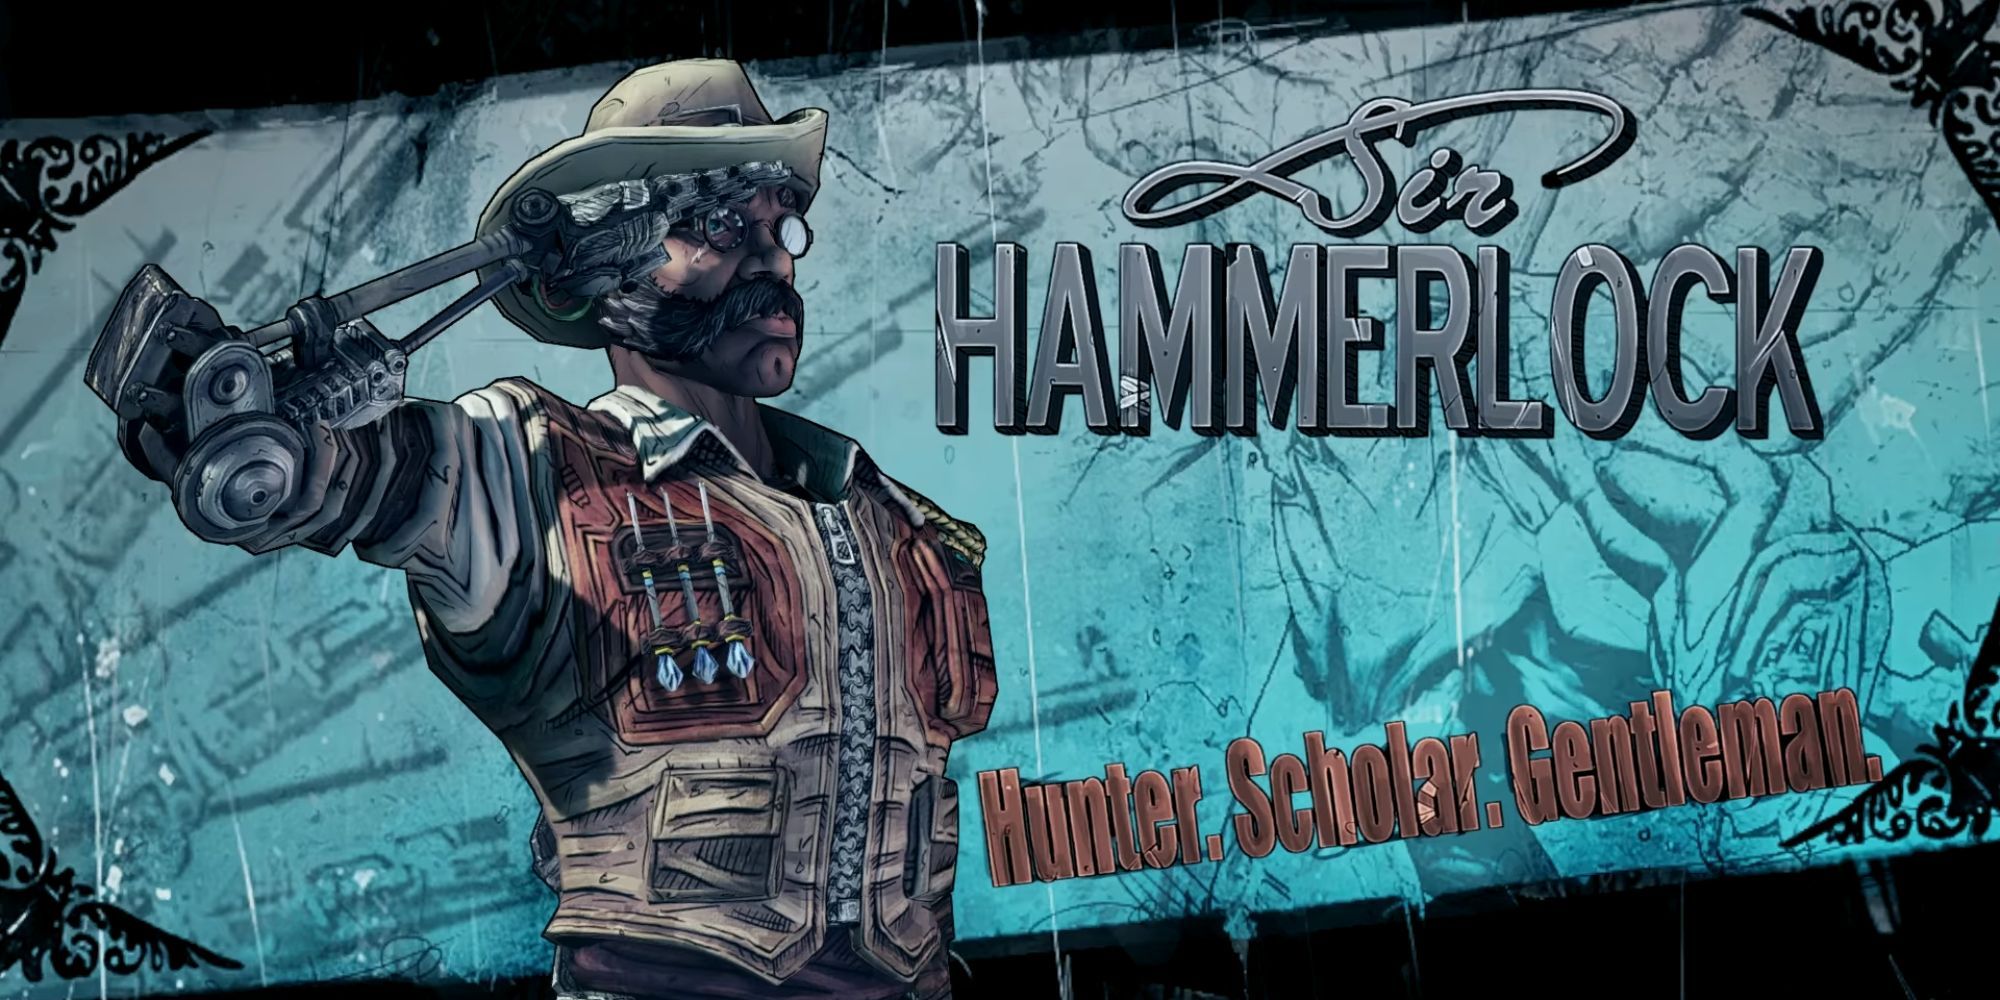 Sir Hammerlock doing a salute as his Character Title screen describes him as hunter, scholar, and gentleman